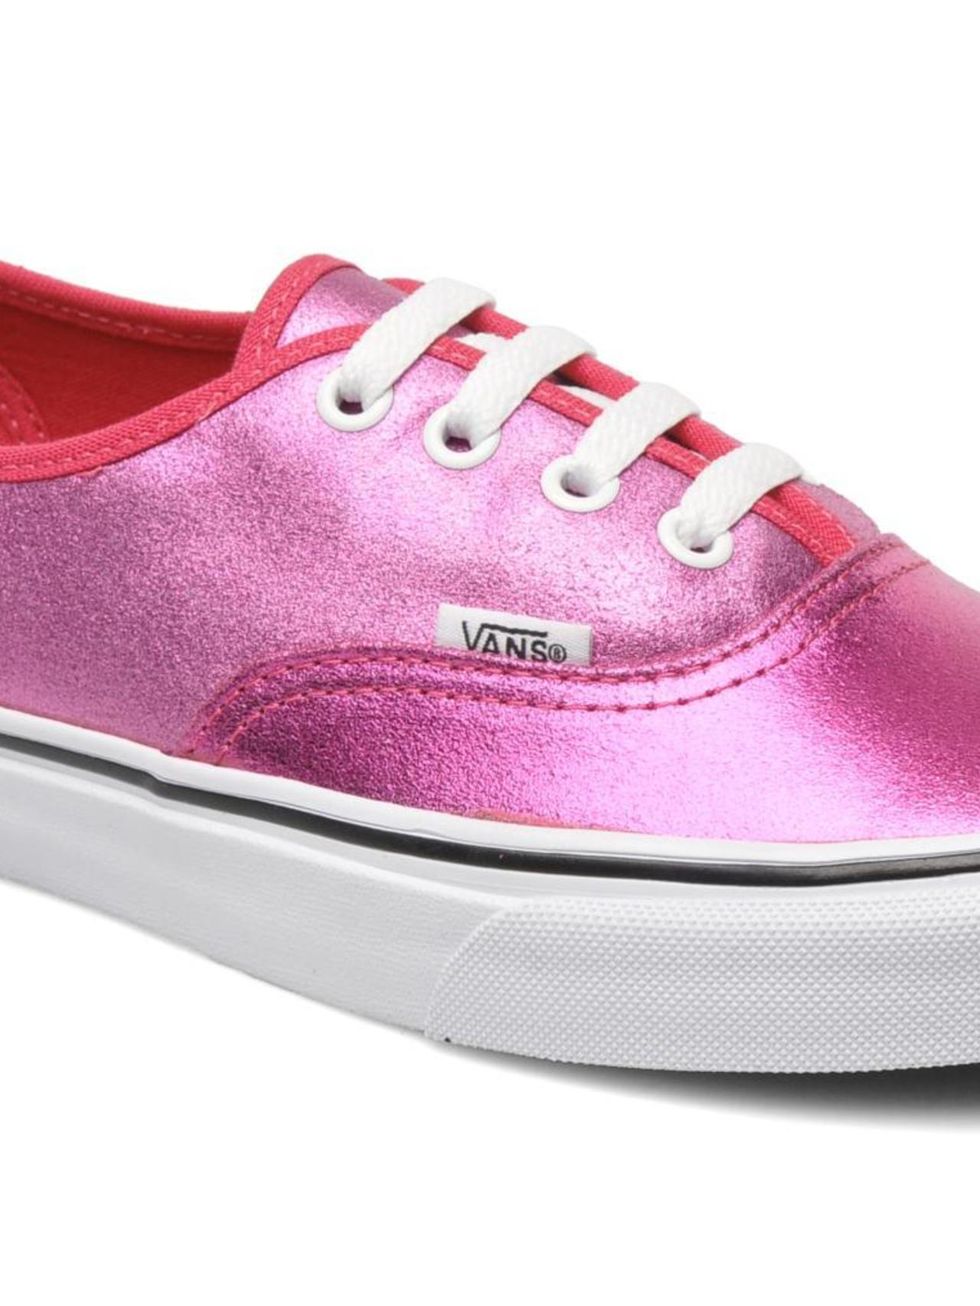 Footwear, Product, Shoe, Magenta, Purple, White, Red, Pink, Violet, Line, 